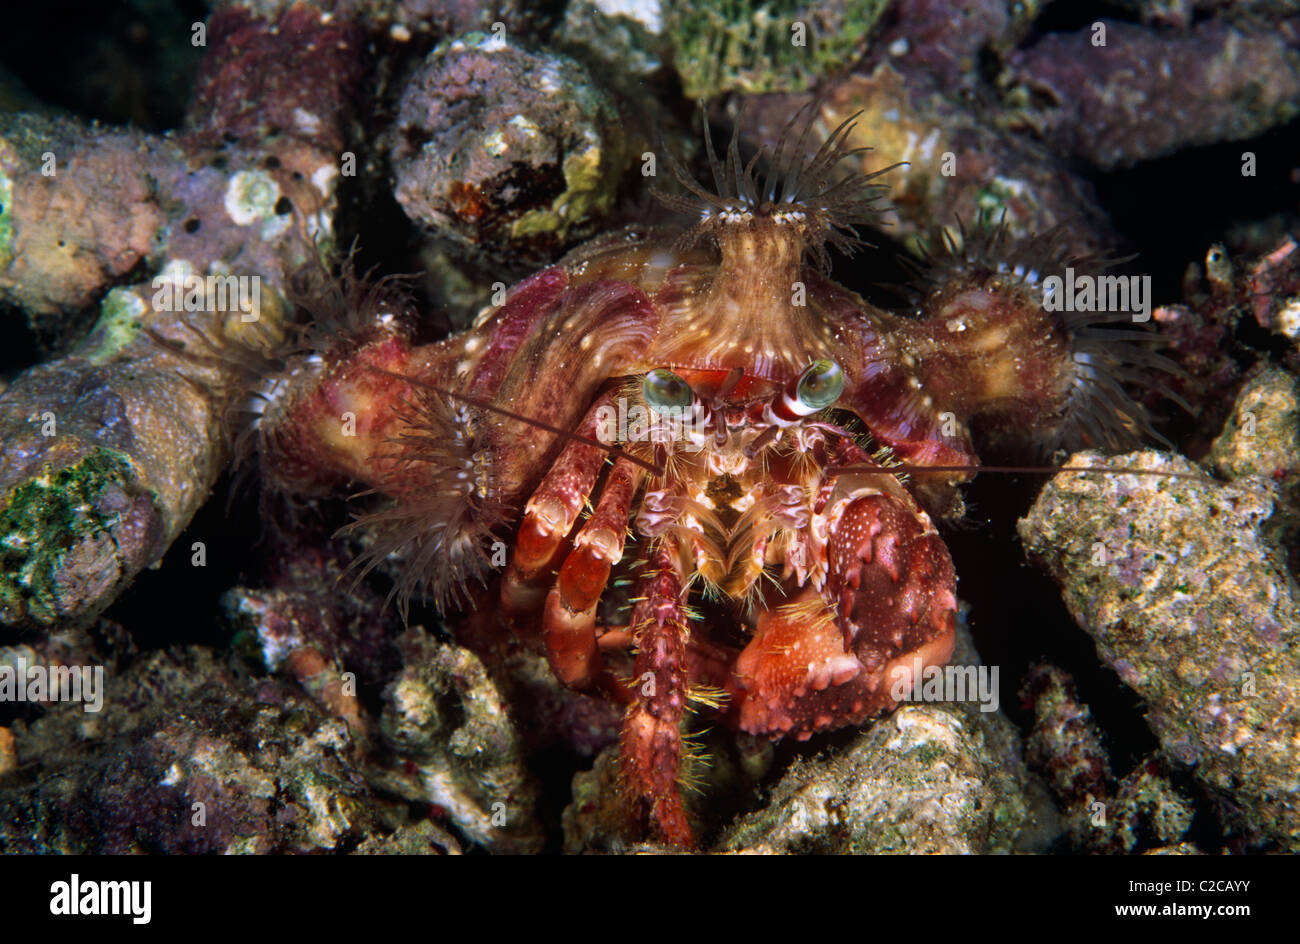 Anemone Hermit Crab, Dardanus pedunculatus, with Sea Anemones, Calliactis polypus, on shell, South Gam Island, Raja Ampat, West Papua, Indonesia Stock Photo